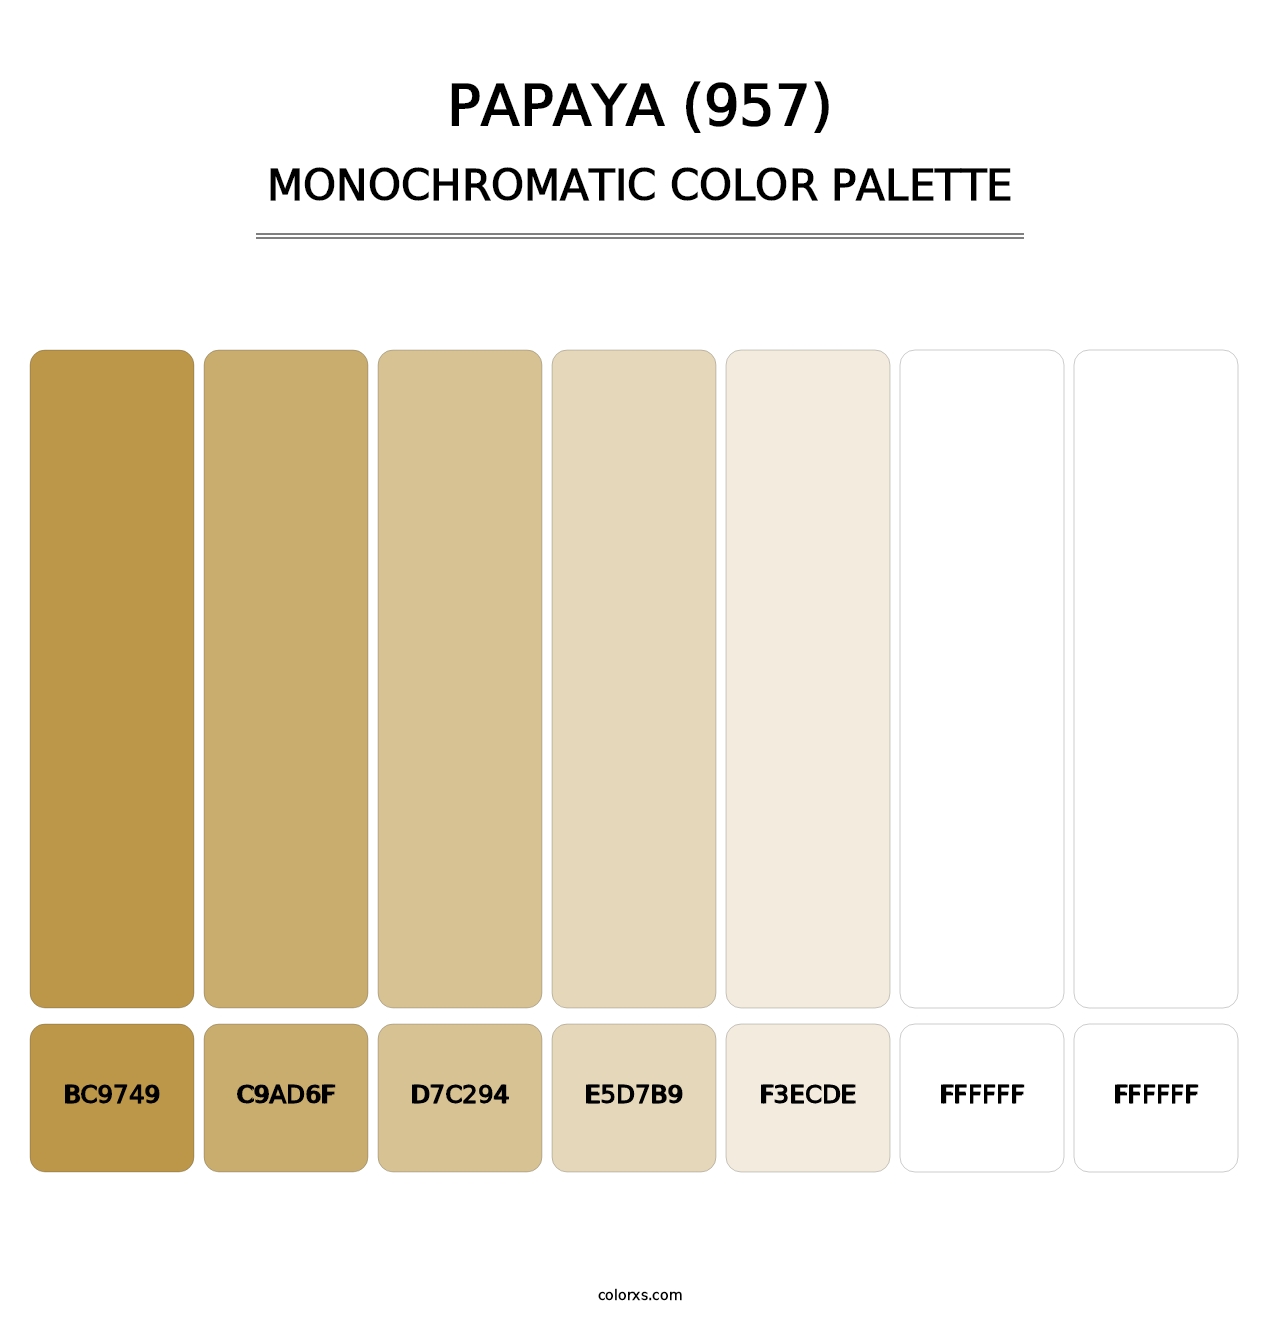 Papaya (957) - Monochromatic Color Palette